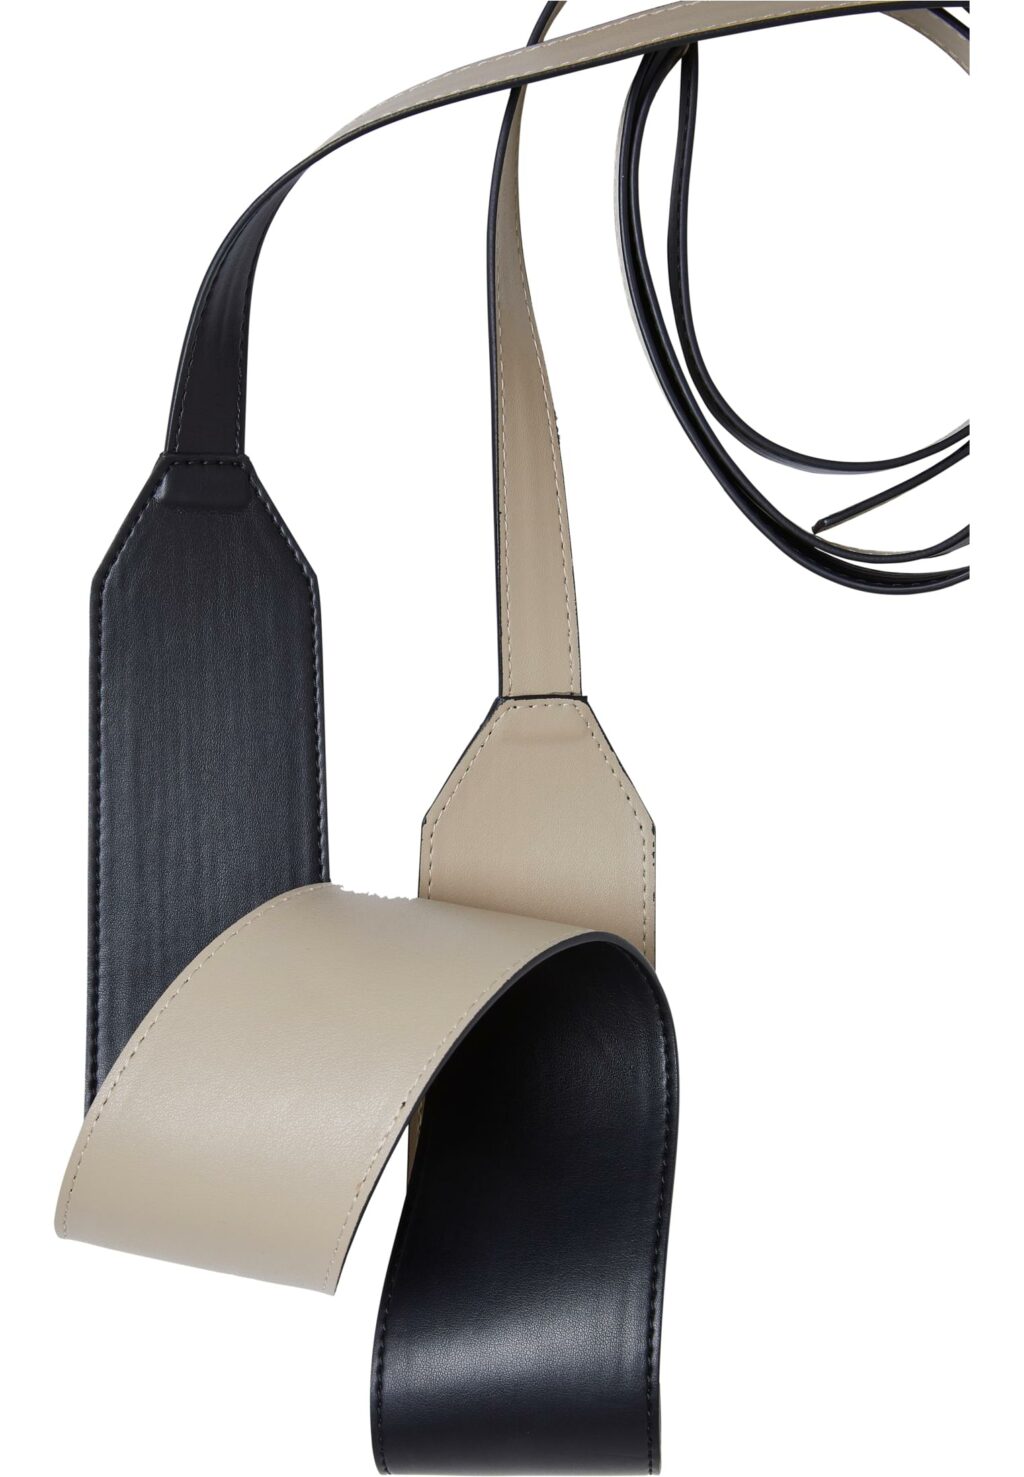 Synthetic Leather Sash Belt black/warmsand TB6553